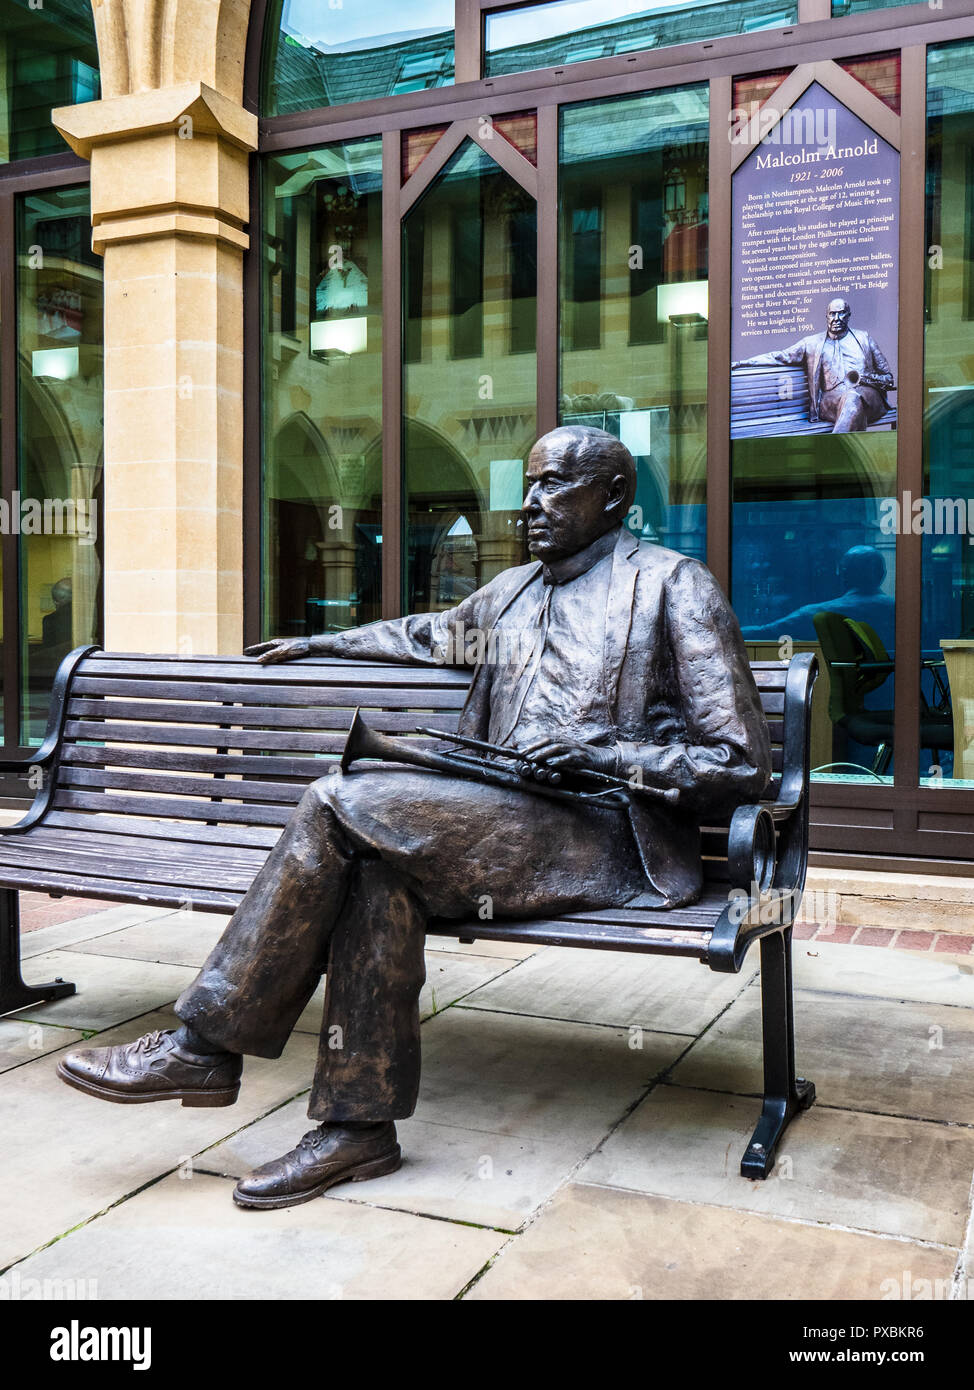 Malcolm Arnold Statue - statue of theNorthampton born composer in Northampton Guildhall - sculptor Richard Austin Stock Photo